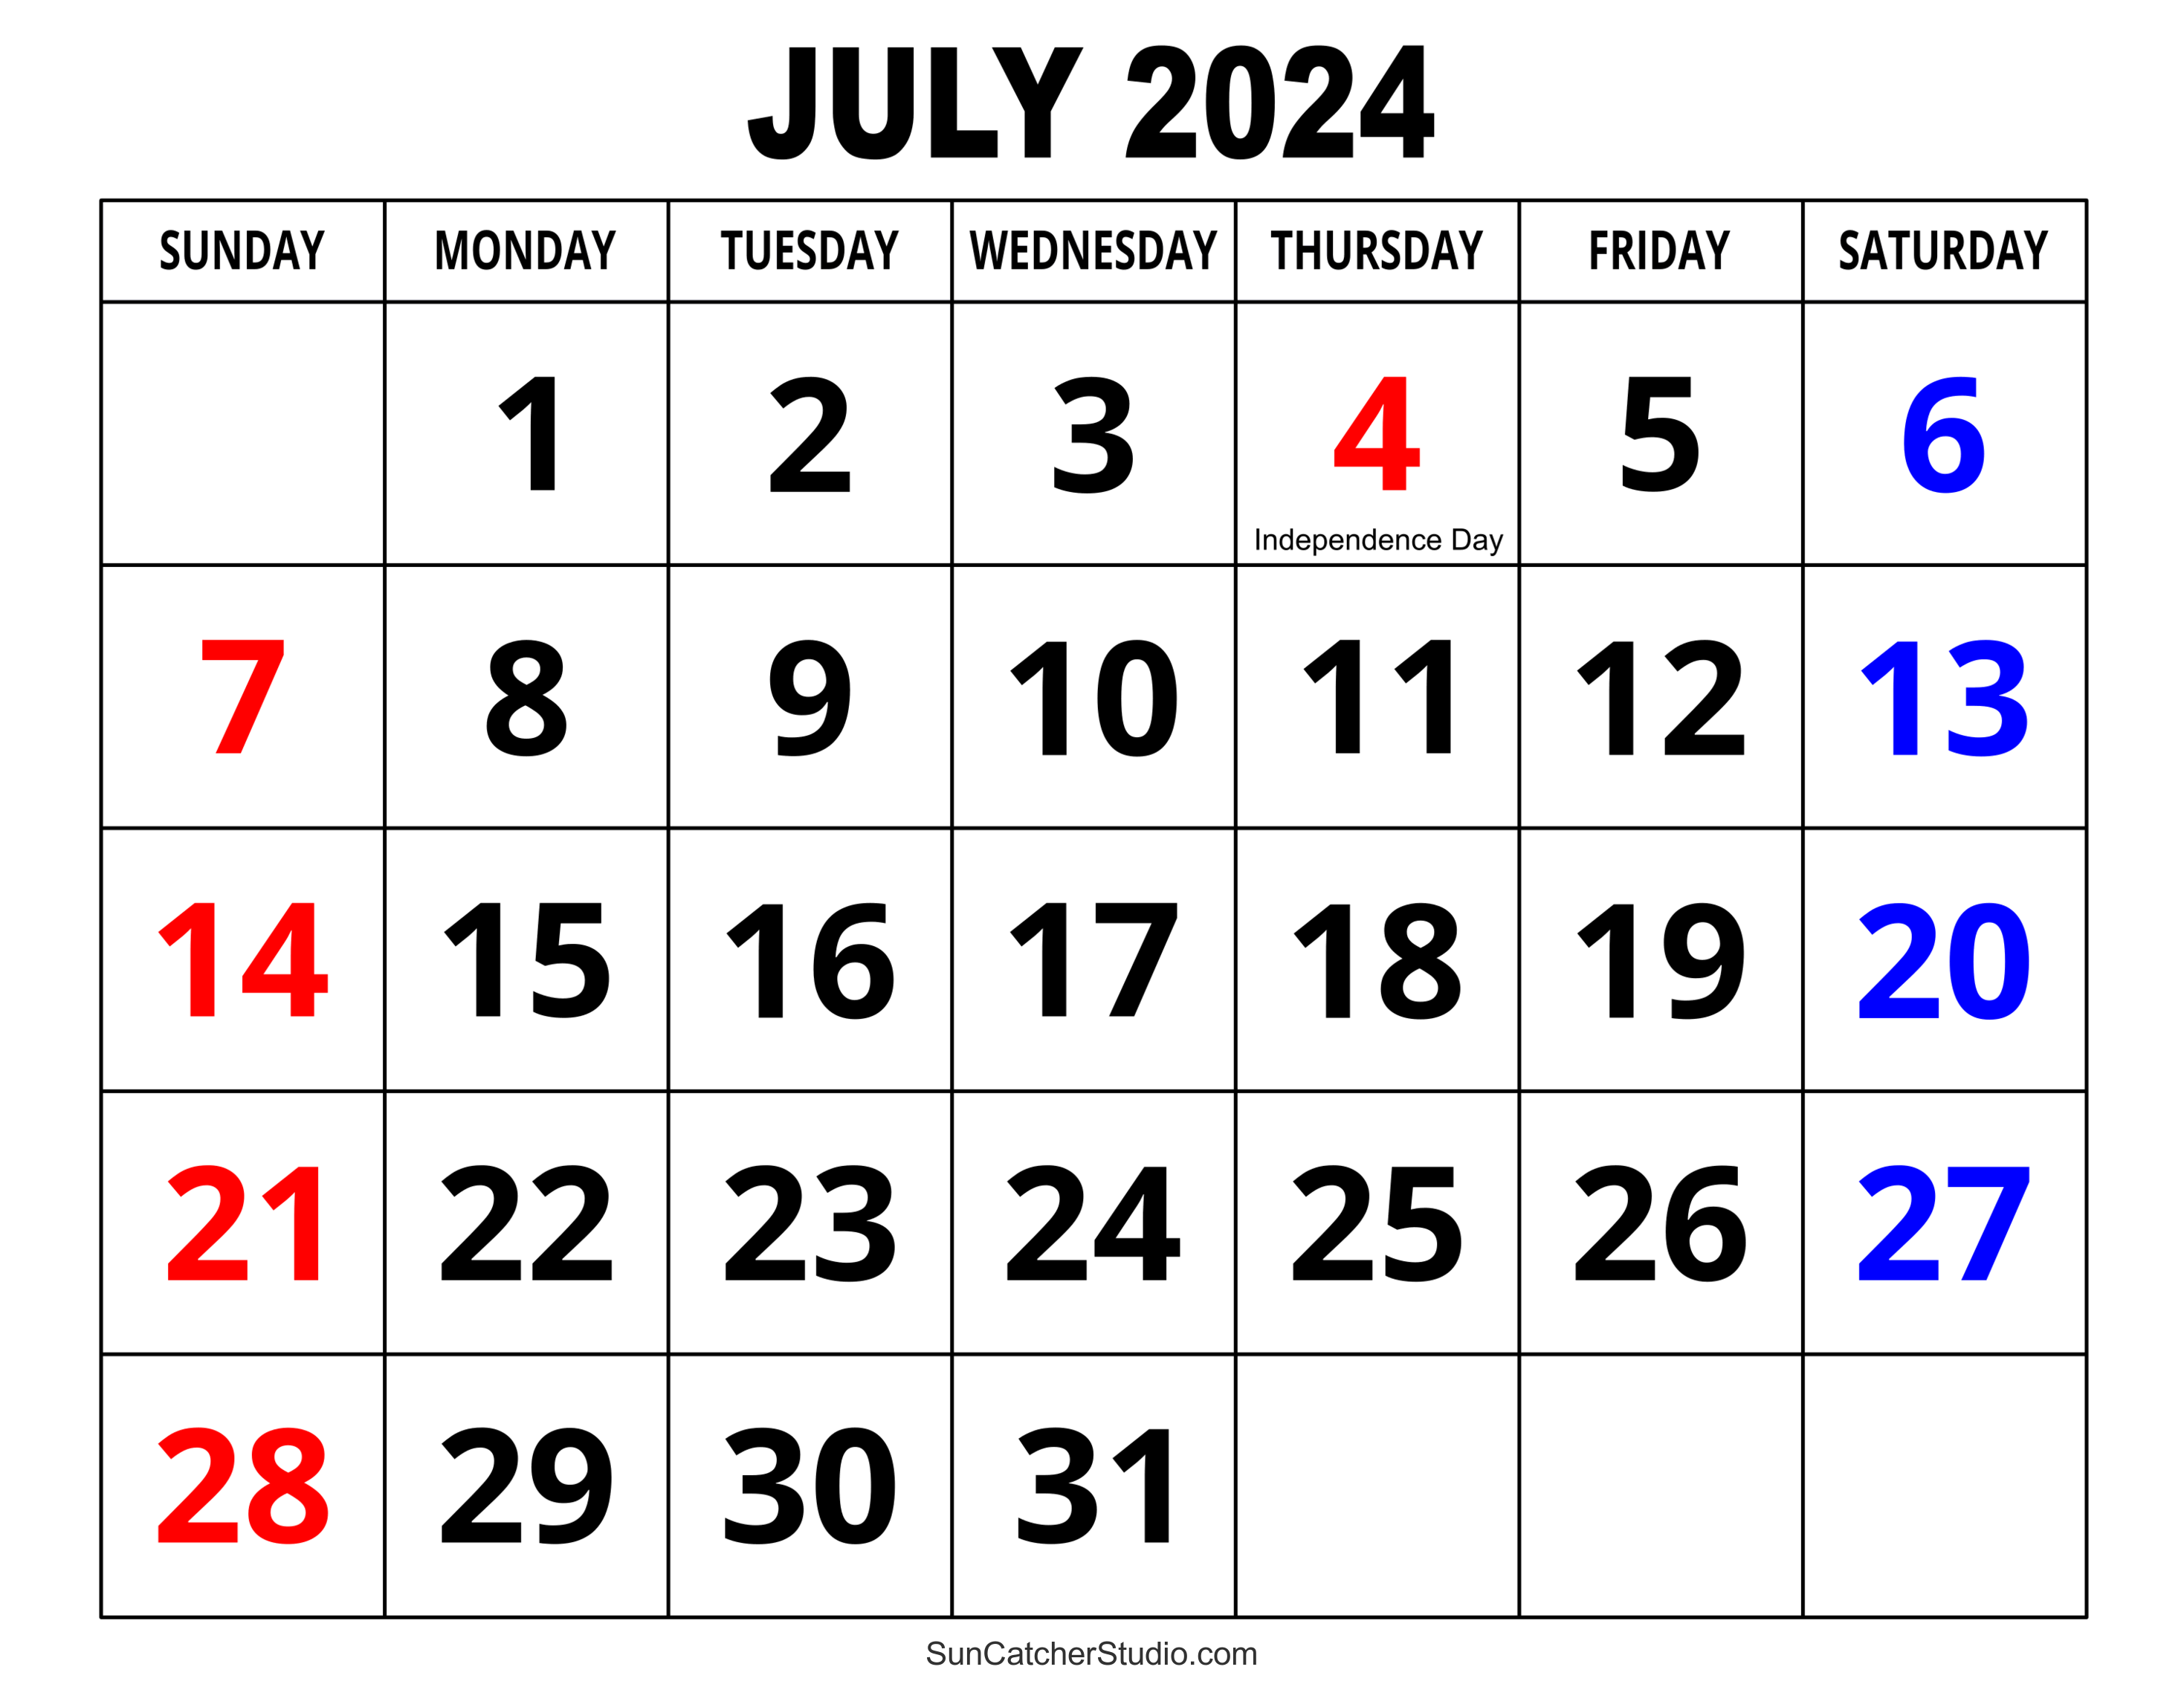 July 2024 Calendar (Free Printable) – Diy Projects, Patterns inside July 20 2024 Calendar